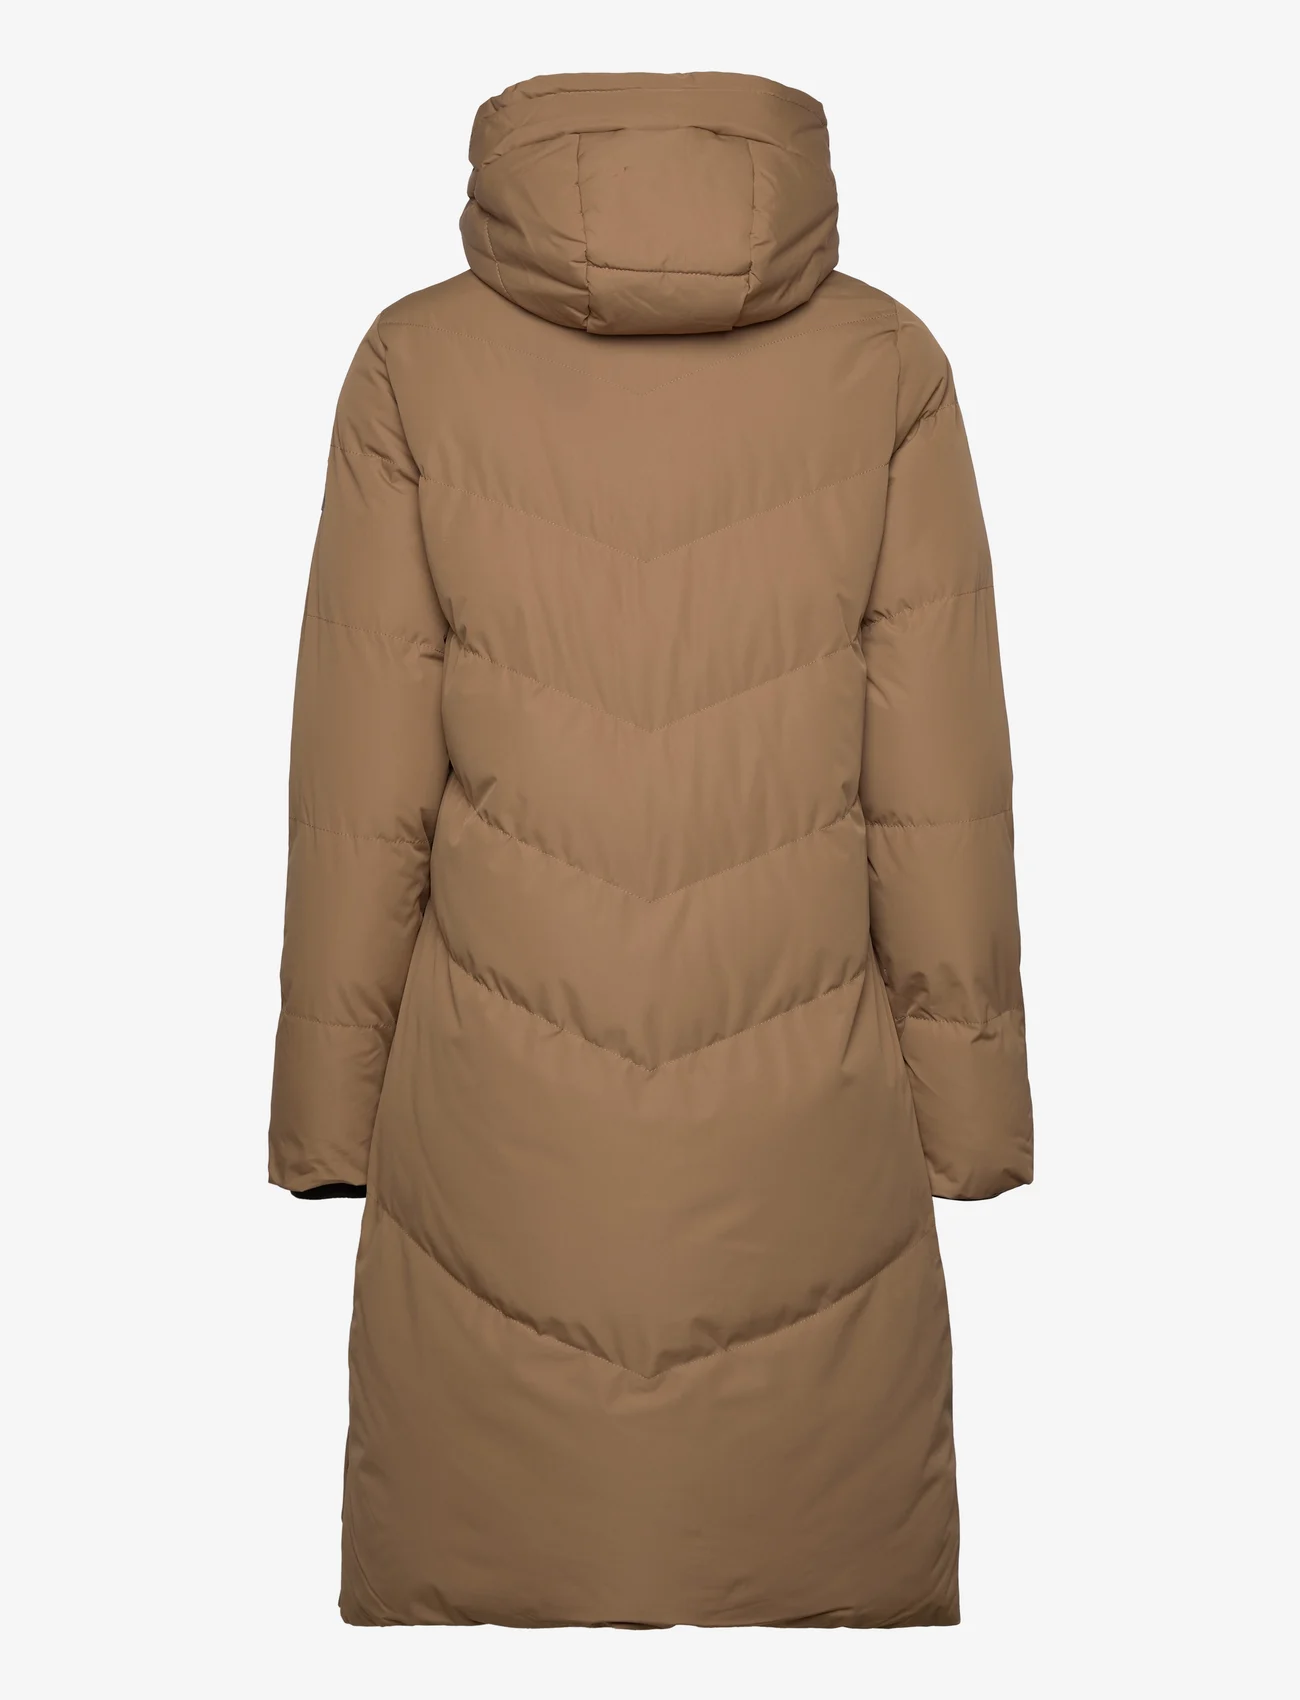 Garcia - ladies outdoor jackets - talvemantlid - brown - 1